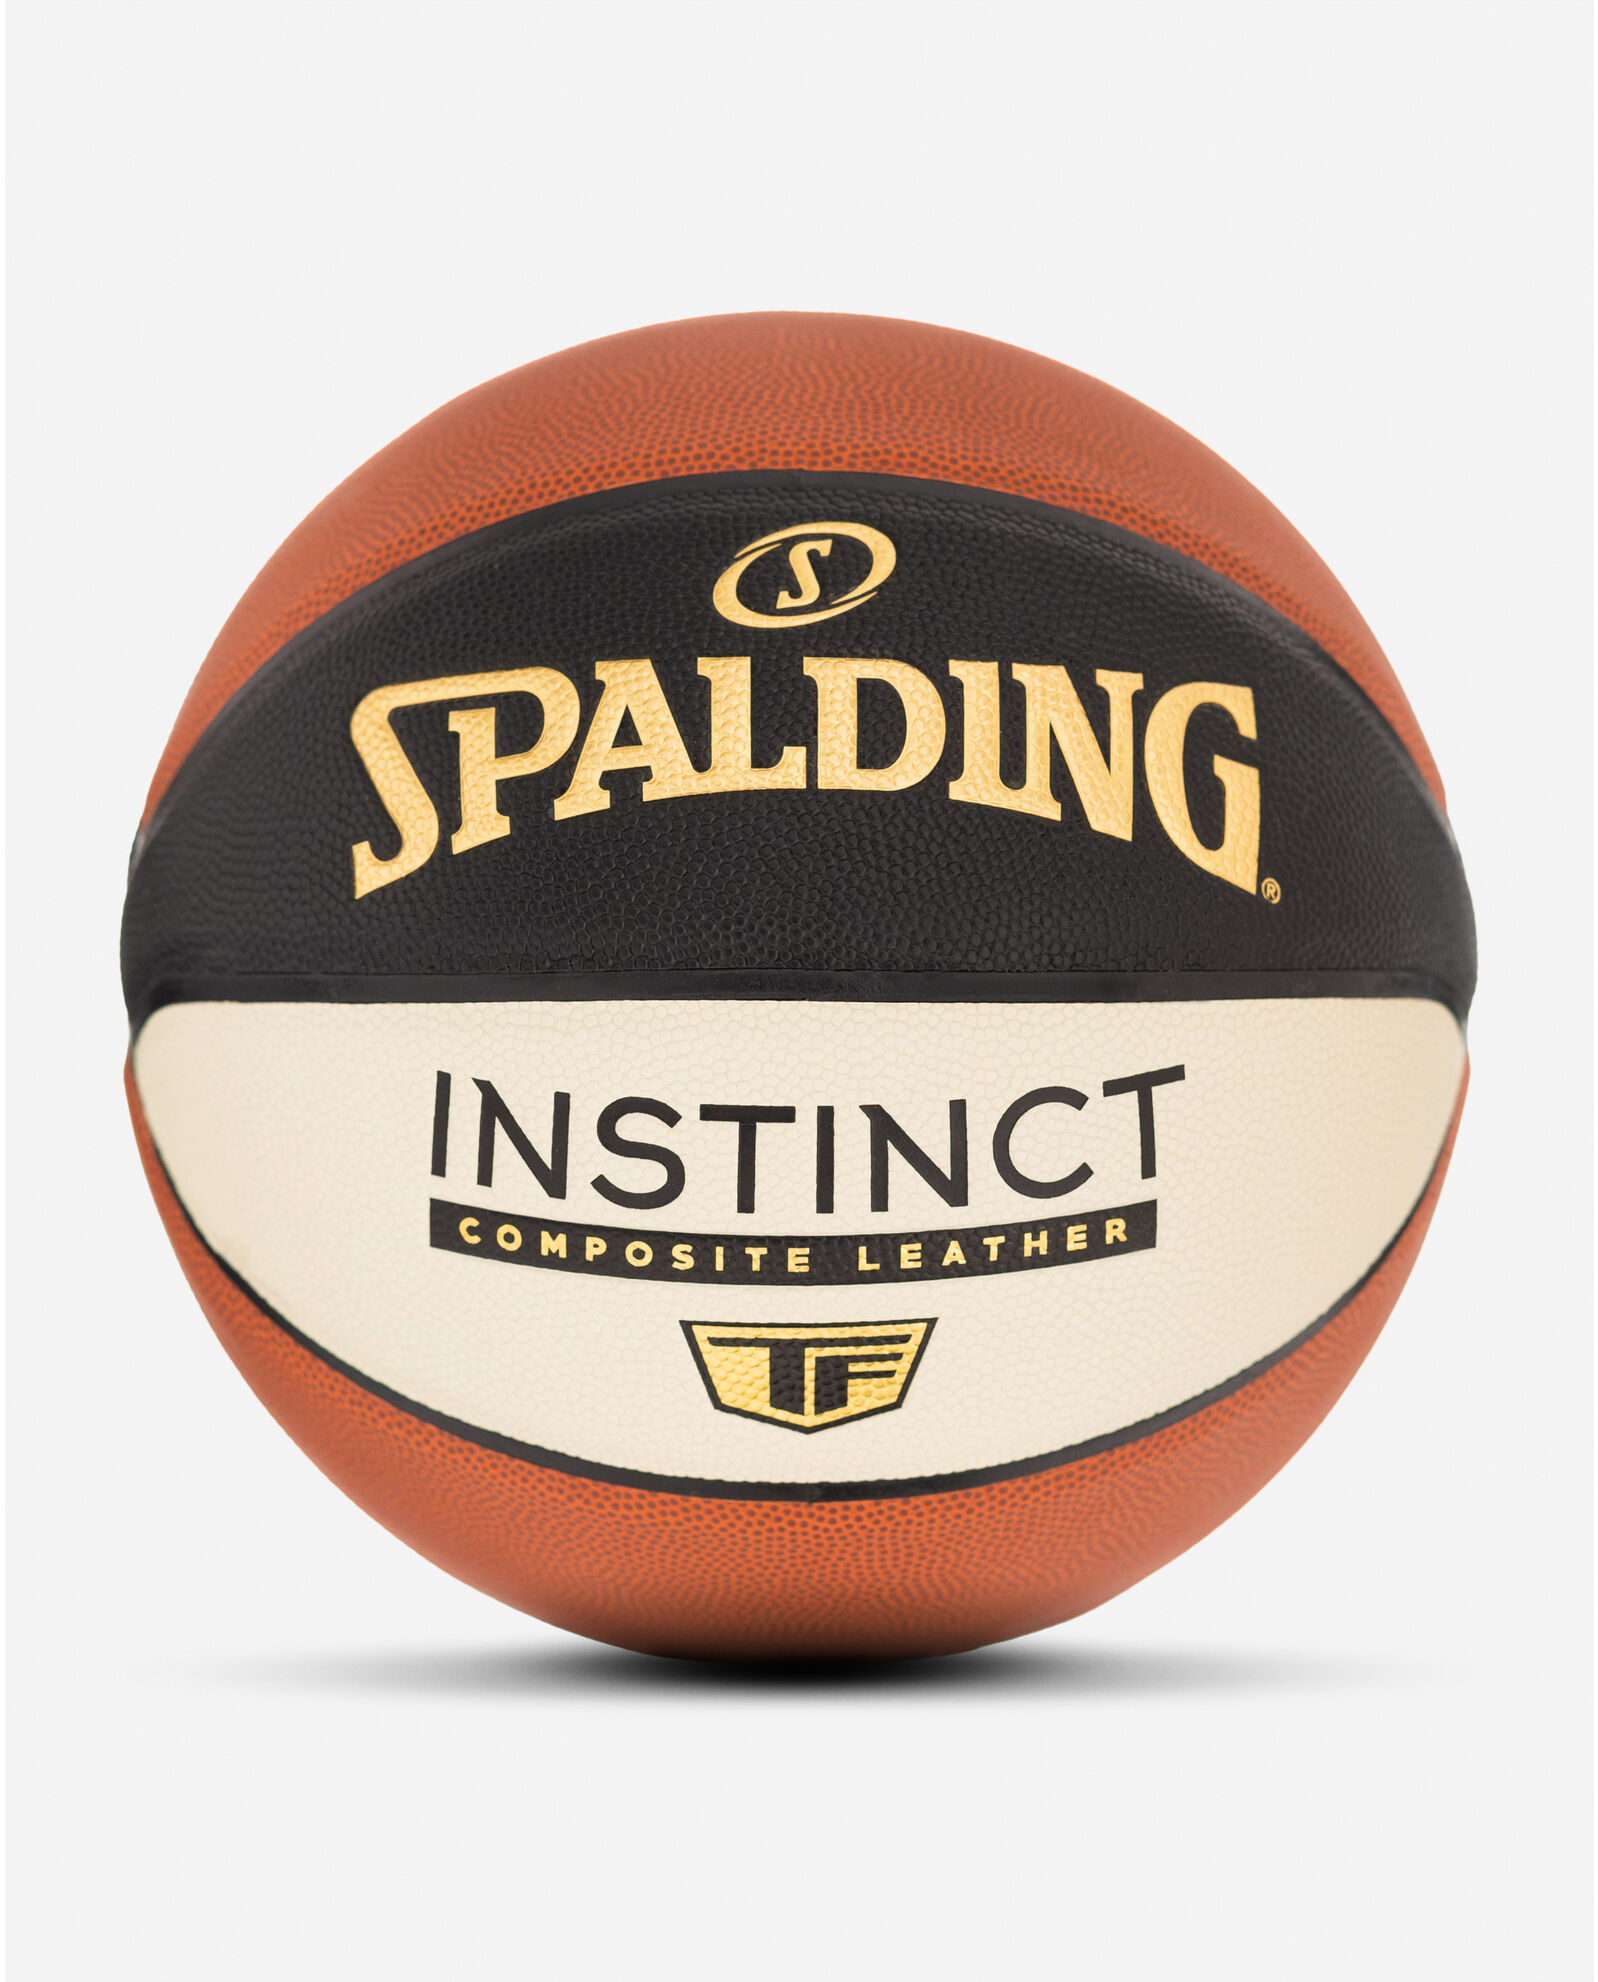 Spalding Instinct TF Indoor-Outdoor Basketball - 29.5 l